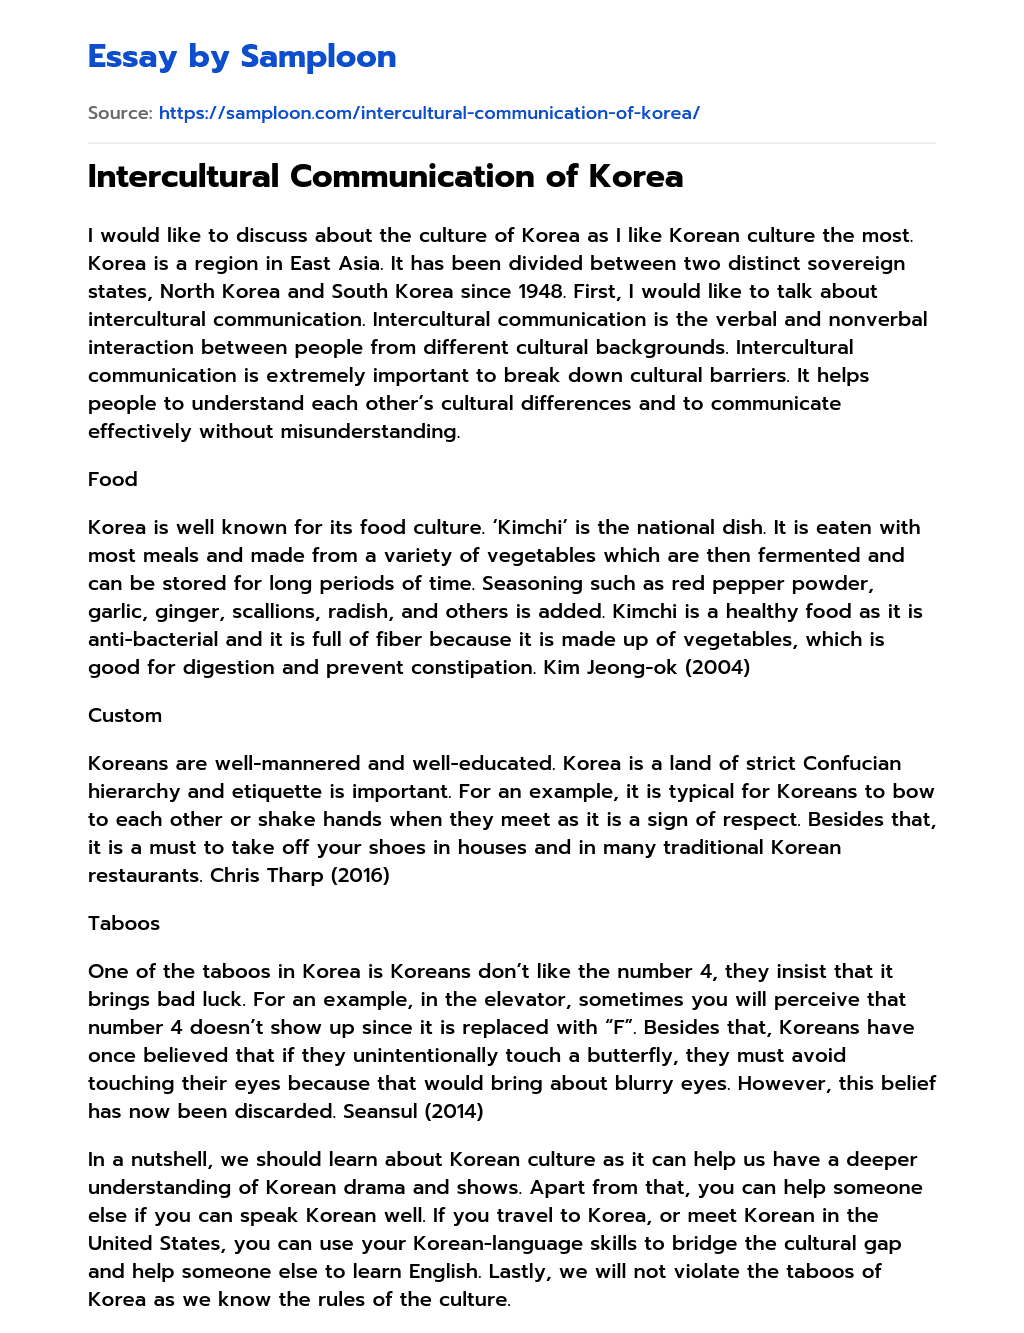 Intercultural Communication of Korea essay